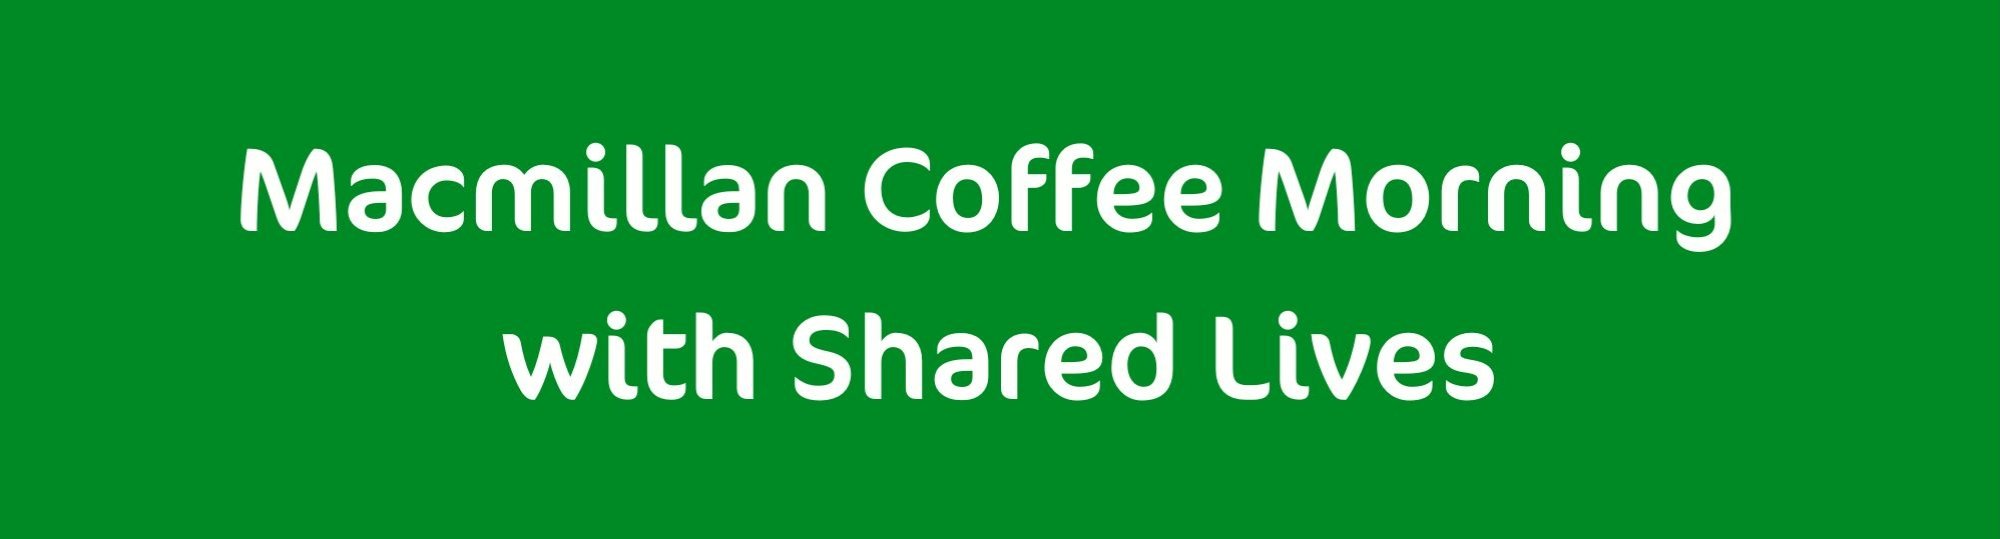 Shared Lives: Macmillan Coffee Morning